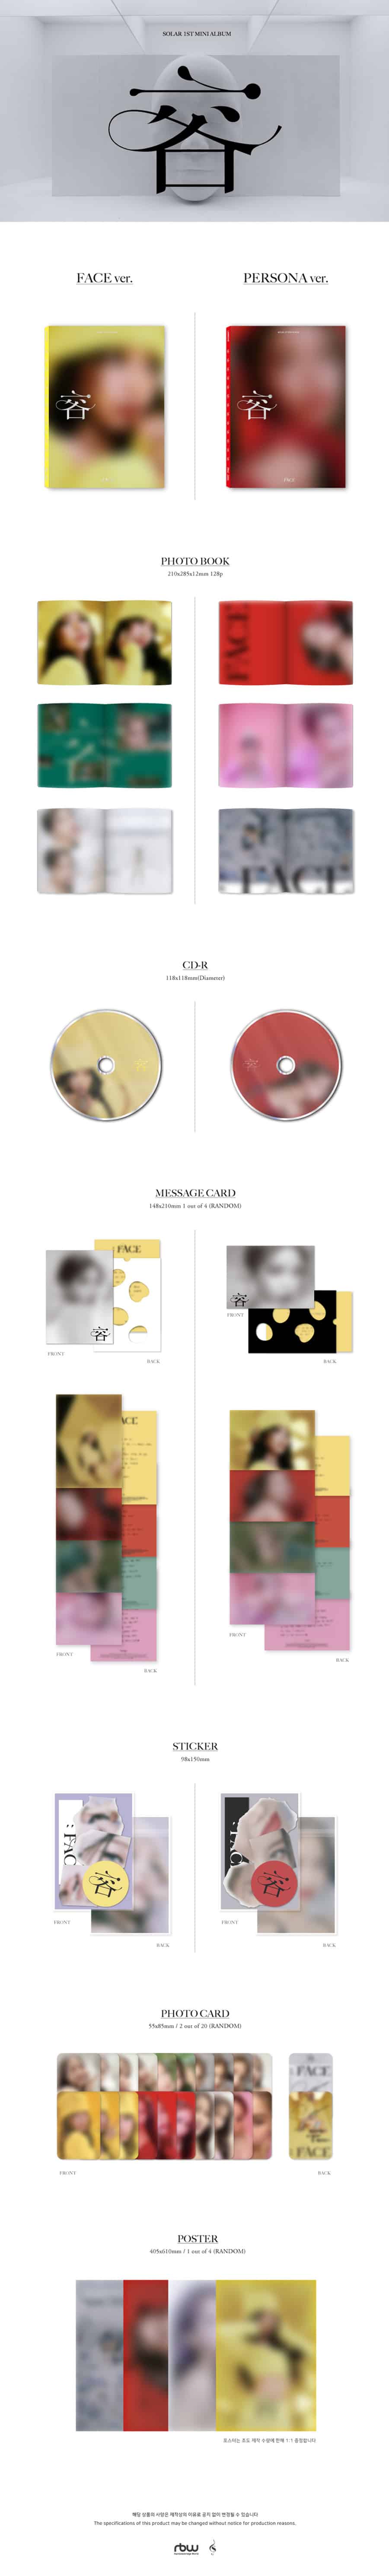 mamamoo-solar-1st-mini-album-face-wholesale